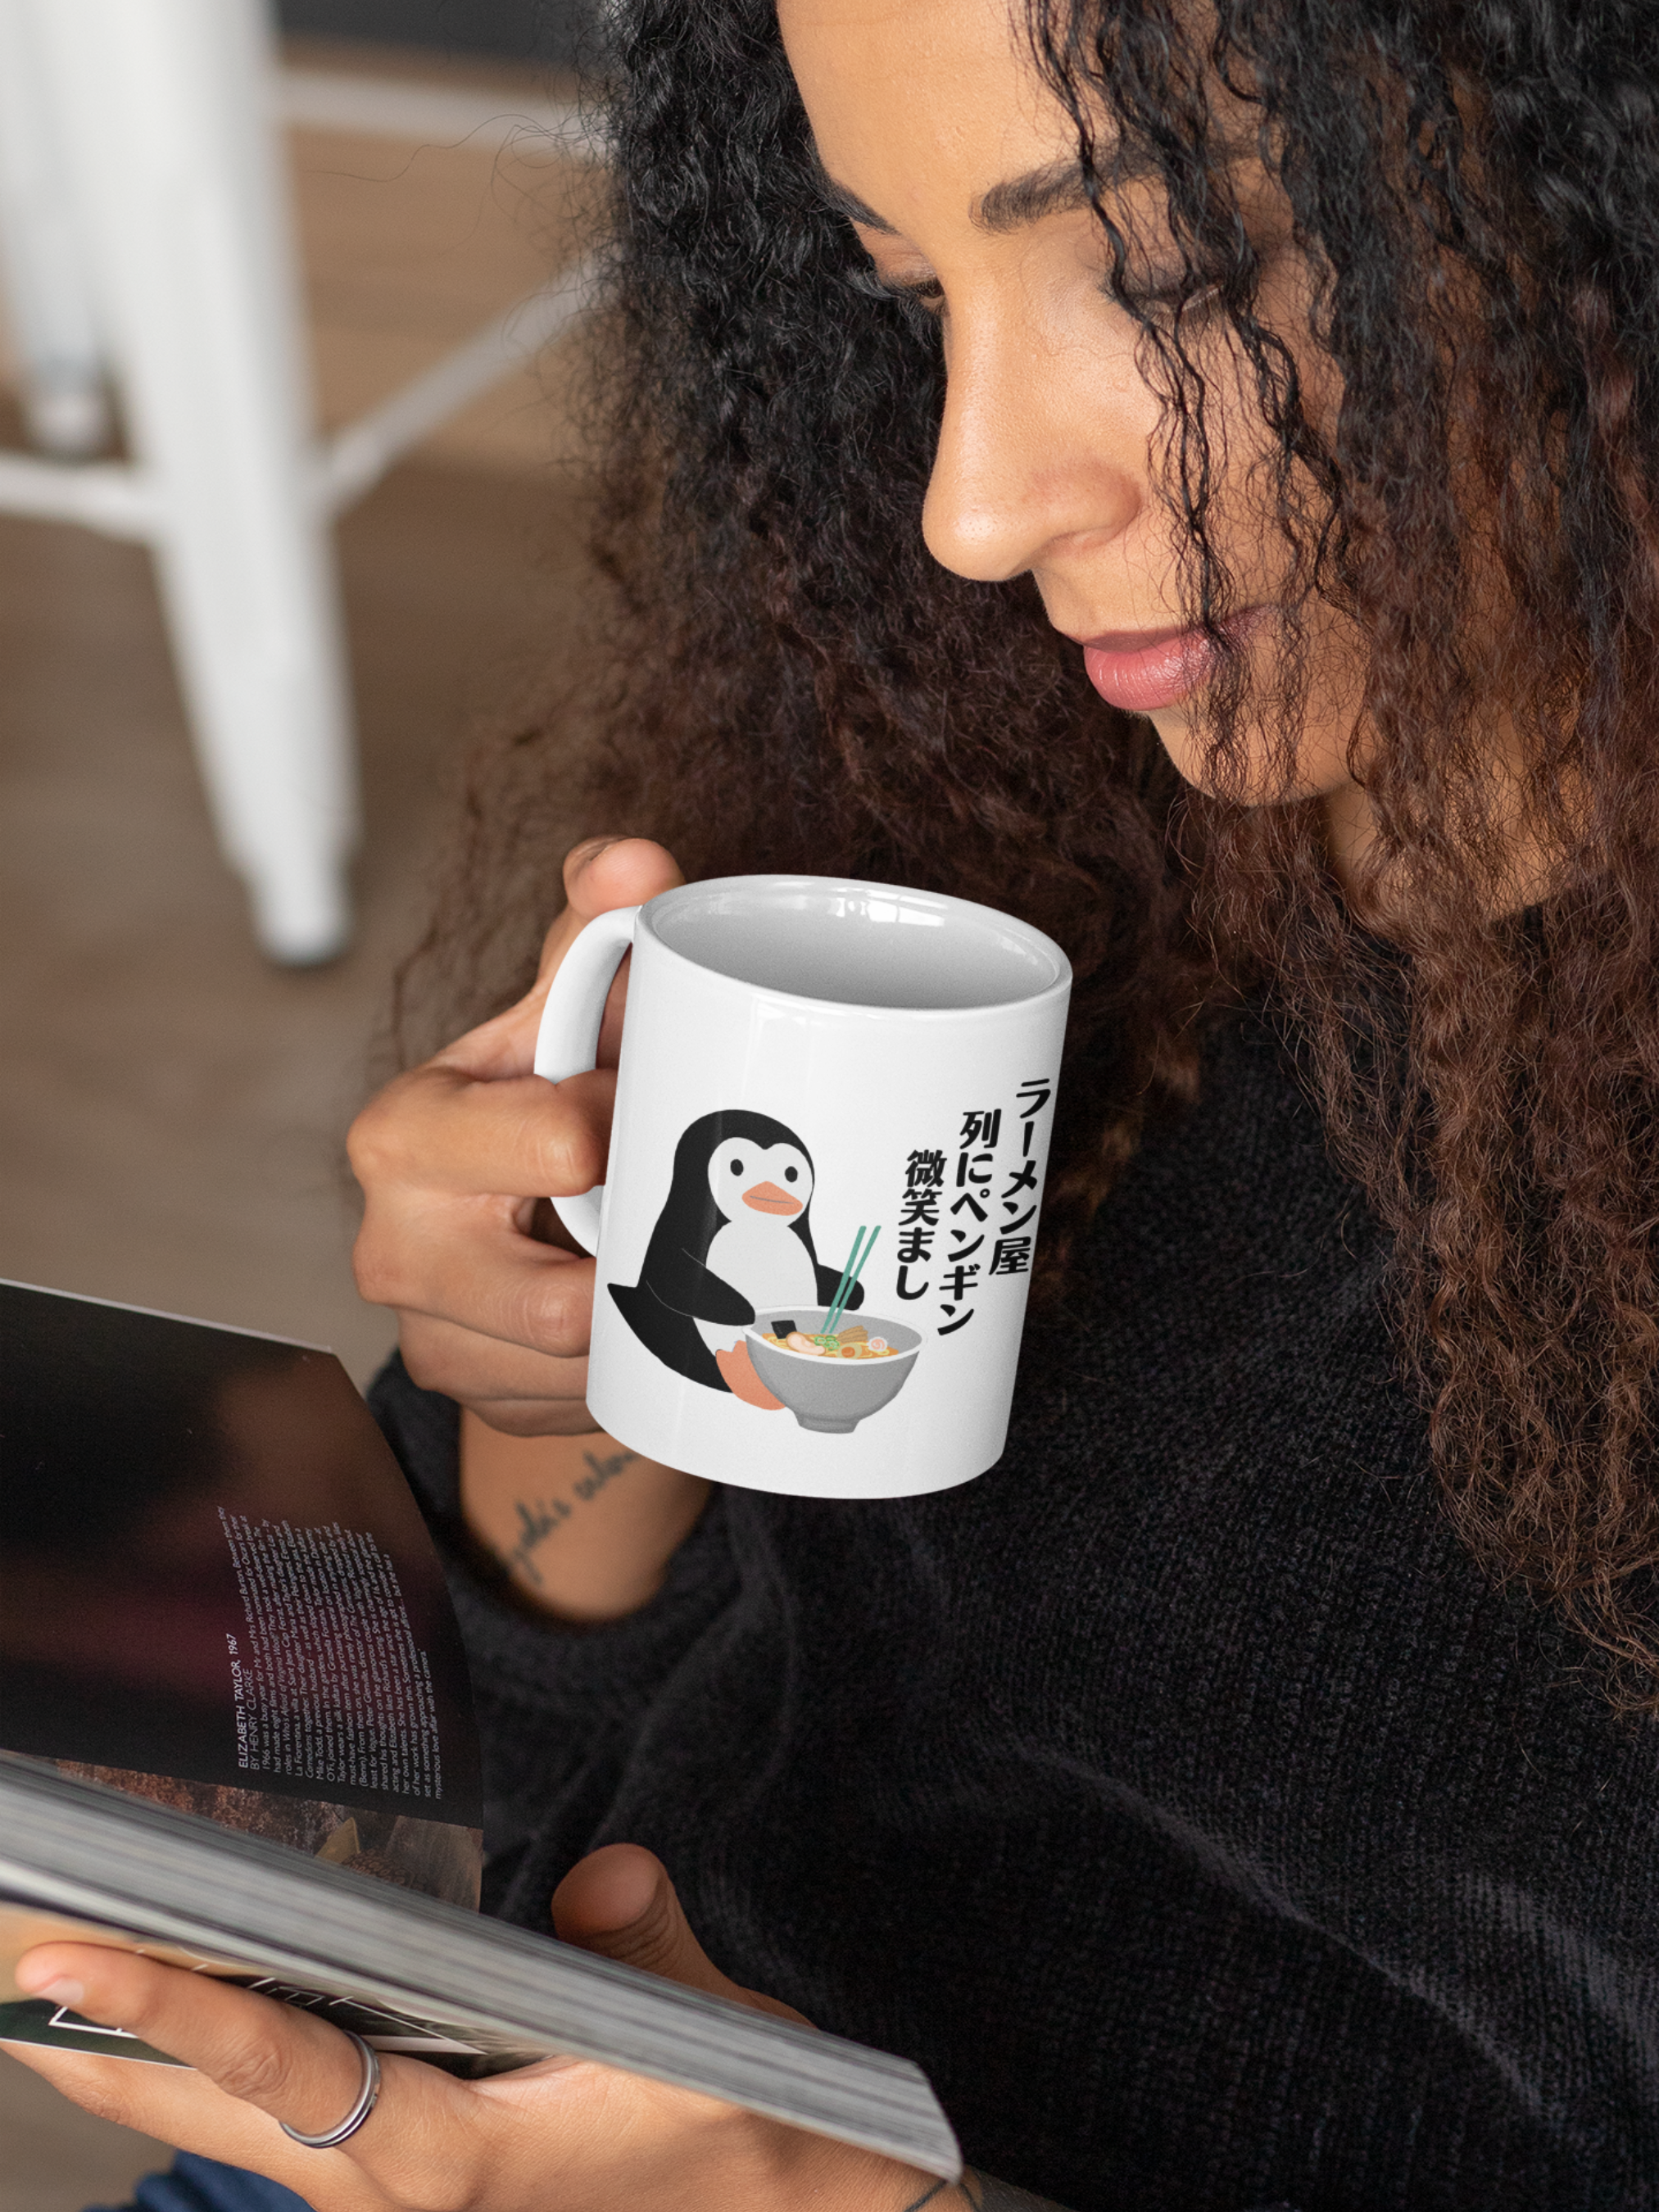 Penguin Coffee Mug: Charming Ramen Shop Haiku - Smiling Penguin Illustration - Penguin Art - Penguin Mug for Tea and Coffee Lovers